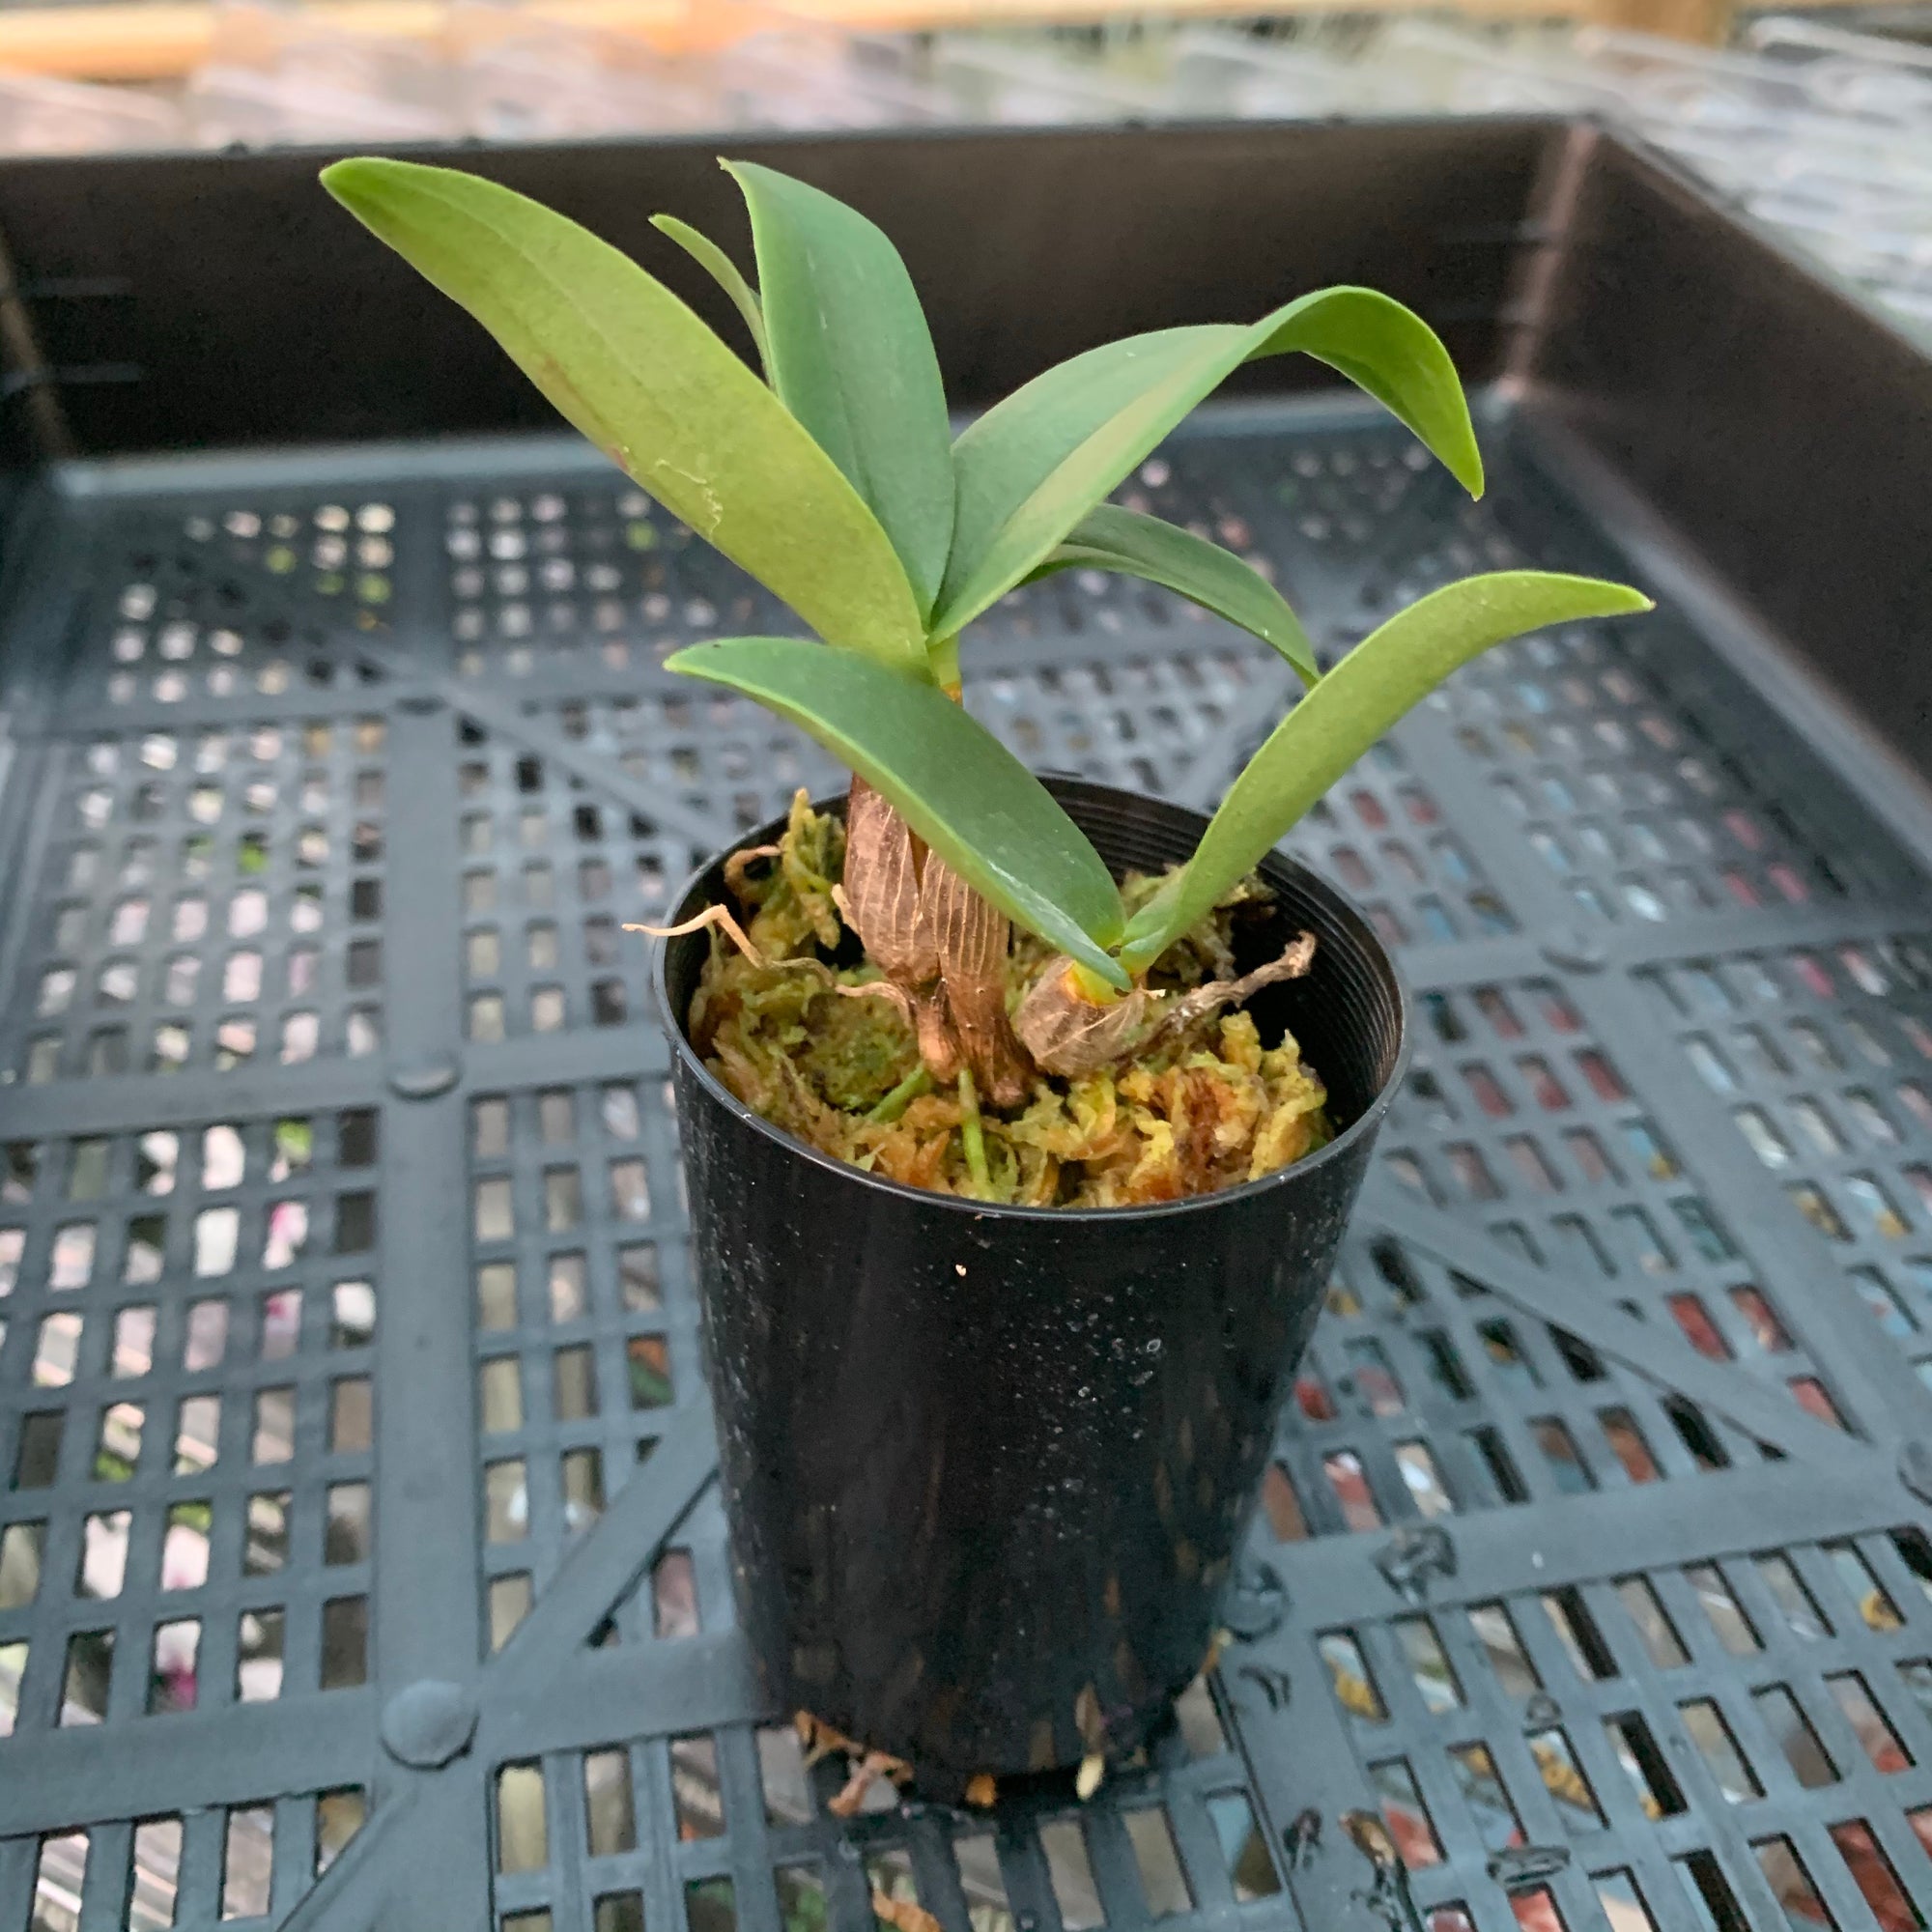 Orchid - Dendrobium Seedling ‘x Ruthorford Blushing Bride’